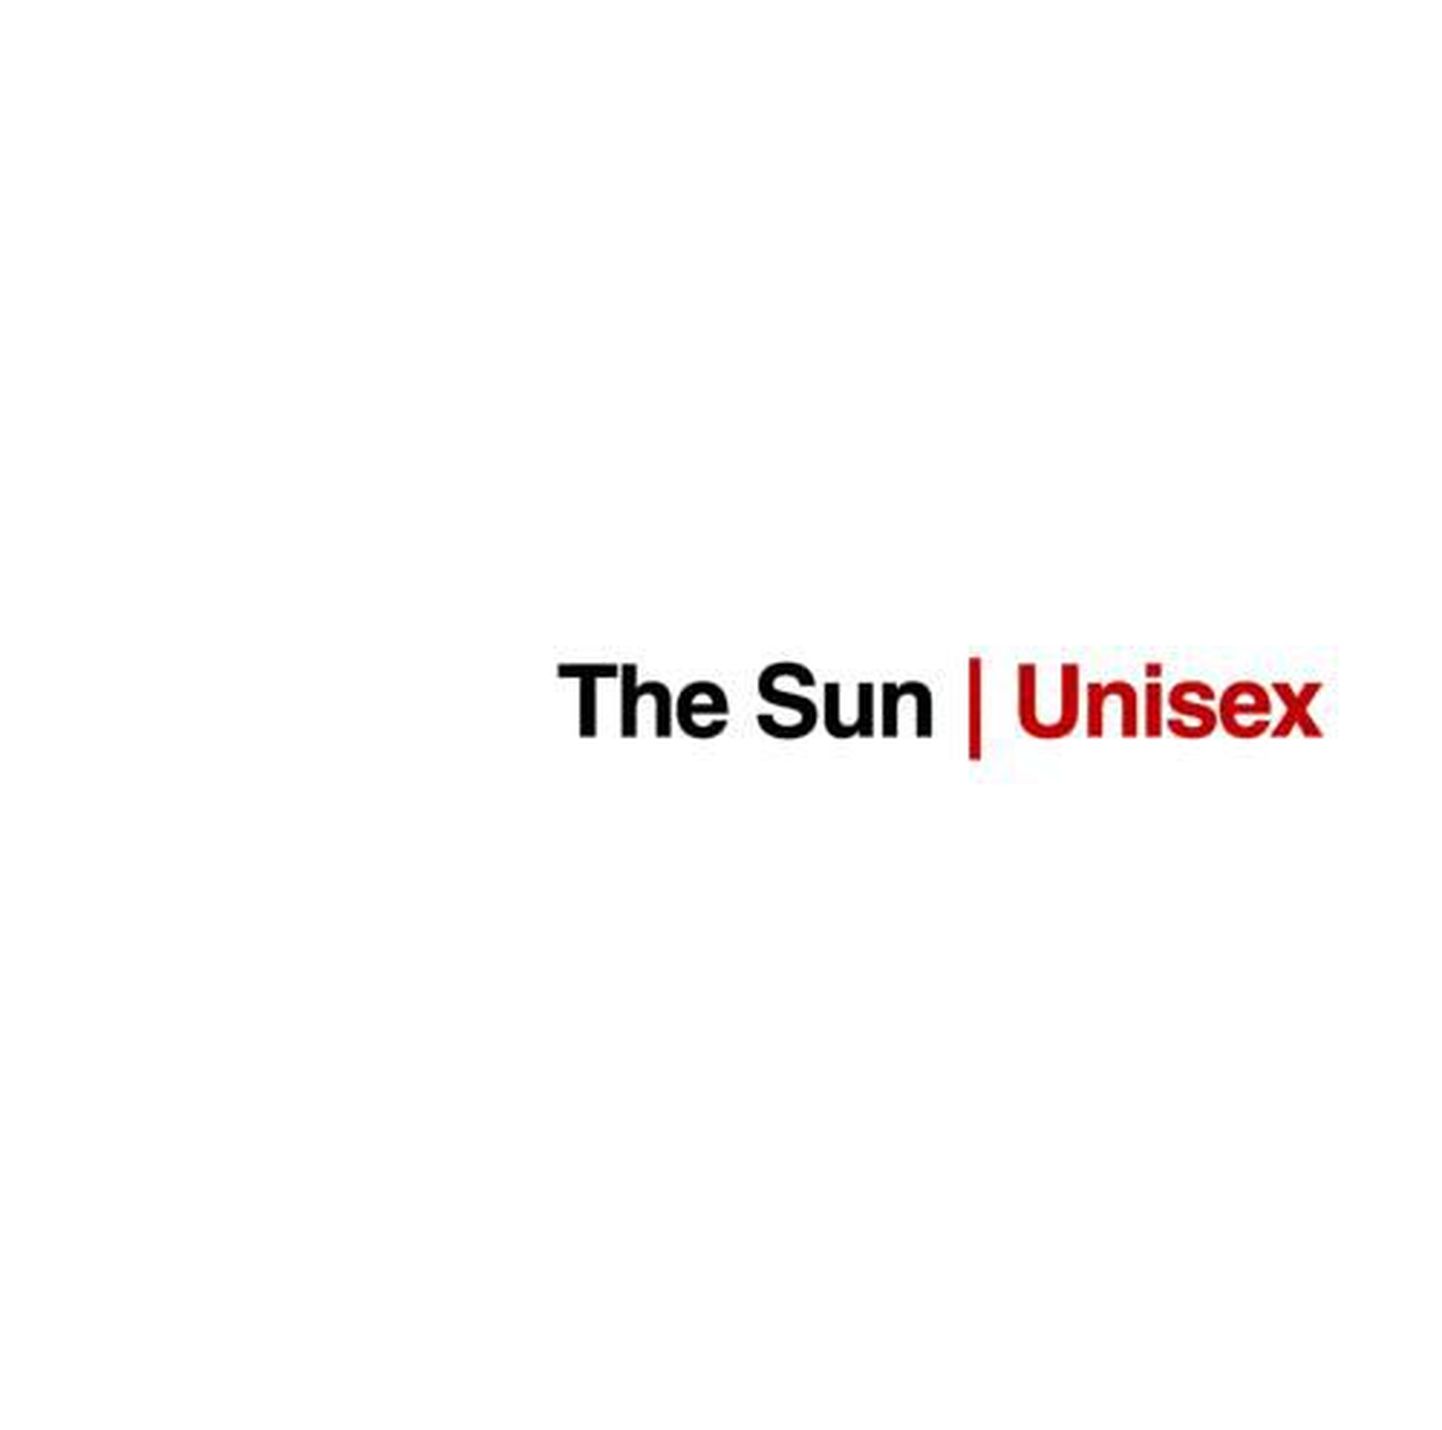 The Sun "Unisex".